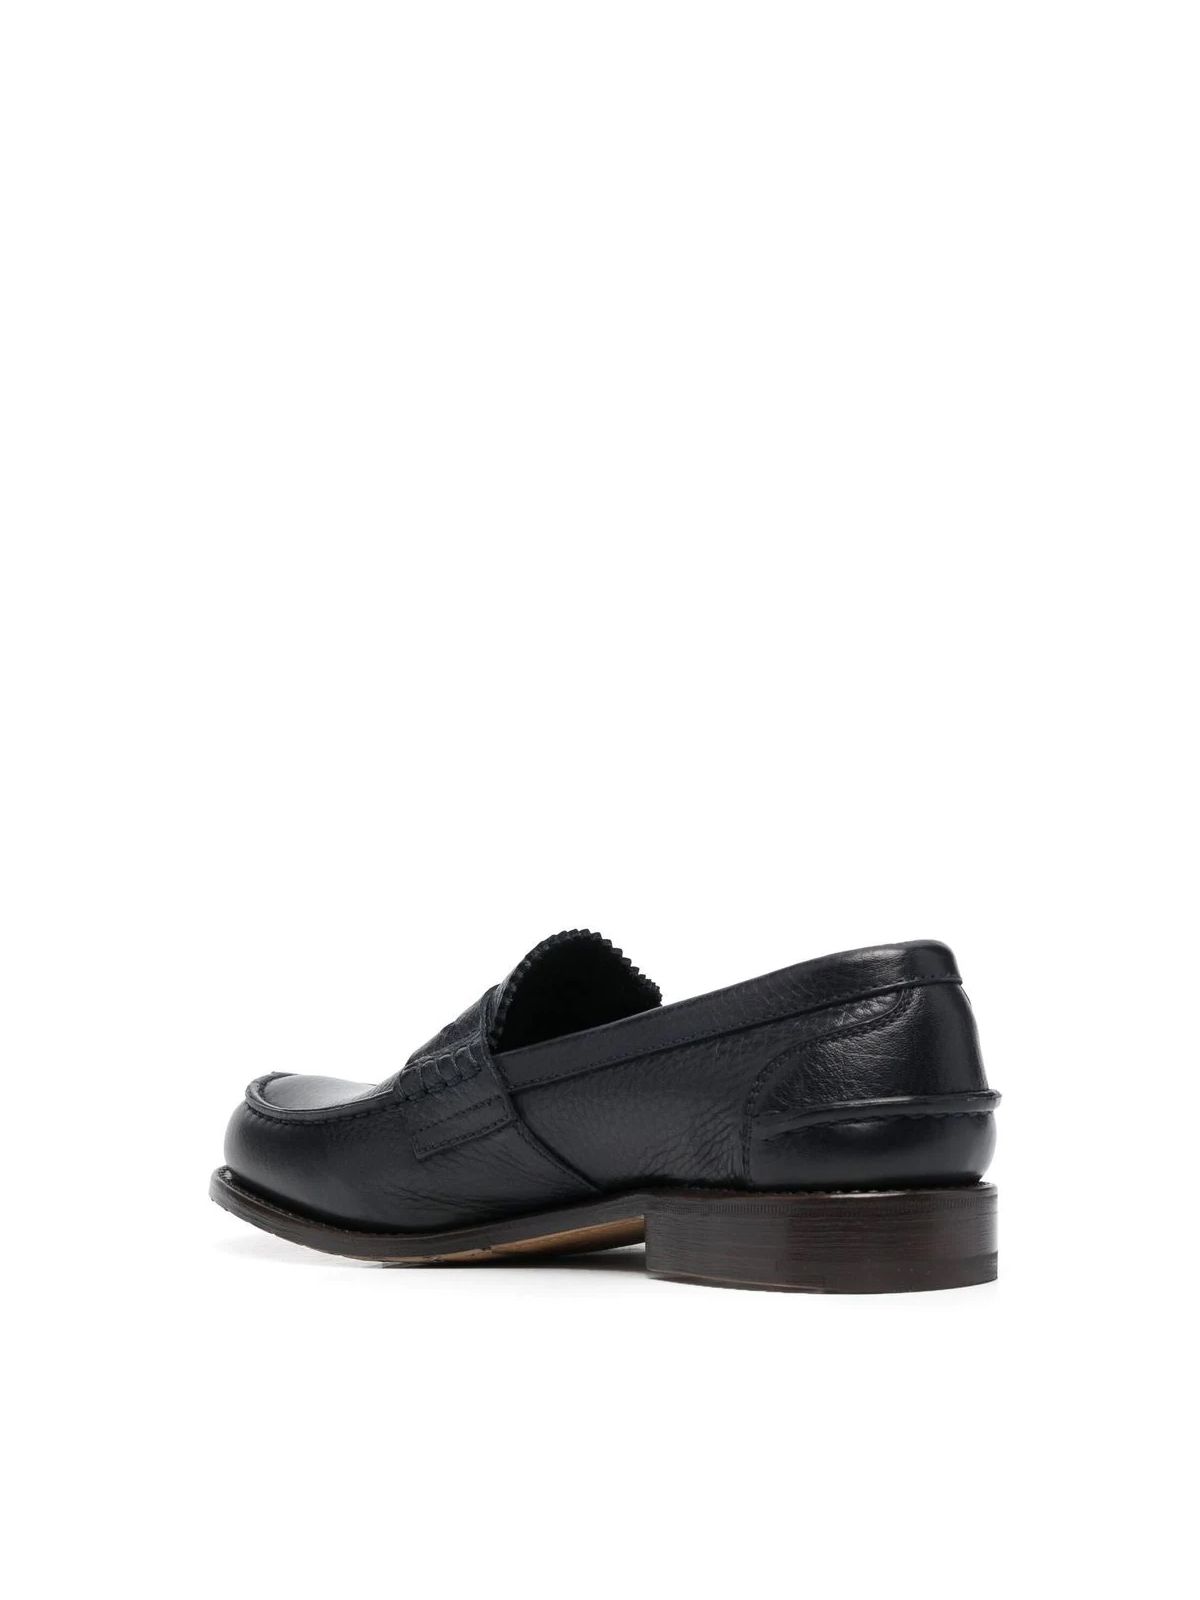 Shop Premiata Men's Leather Loafers